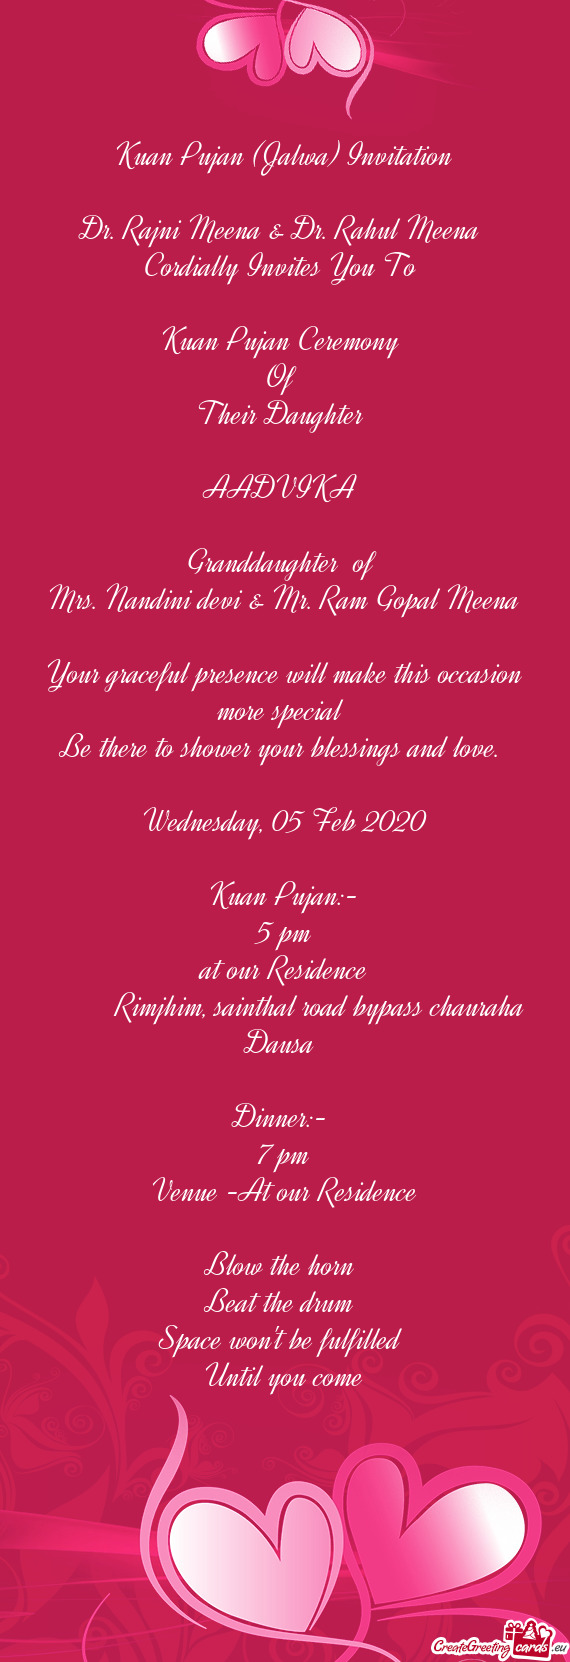 Kuan Pujan (Jalwa) Invitation